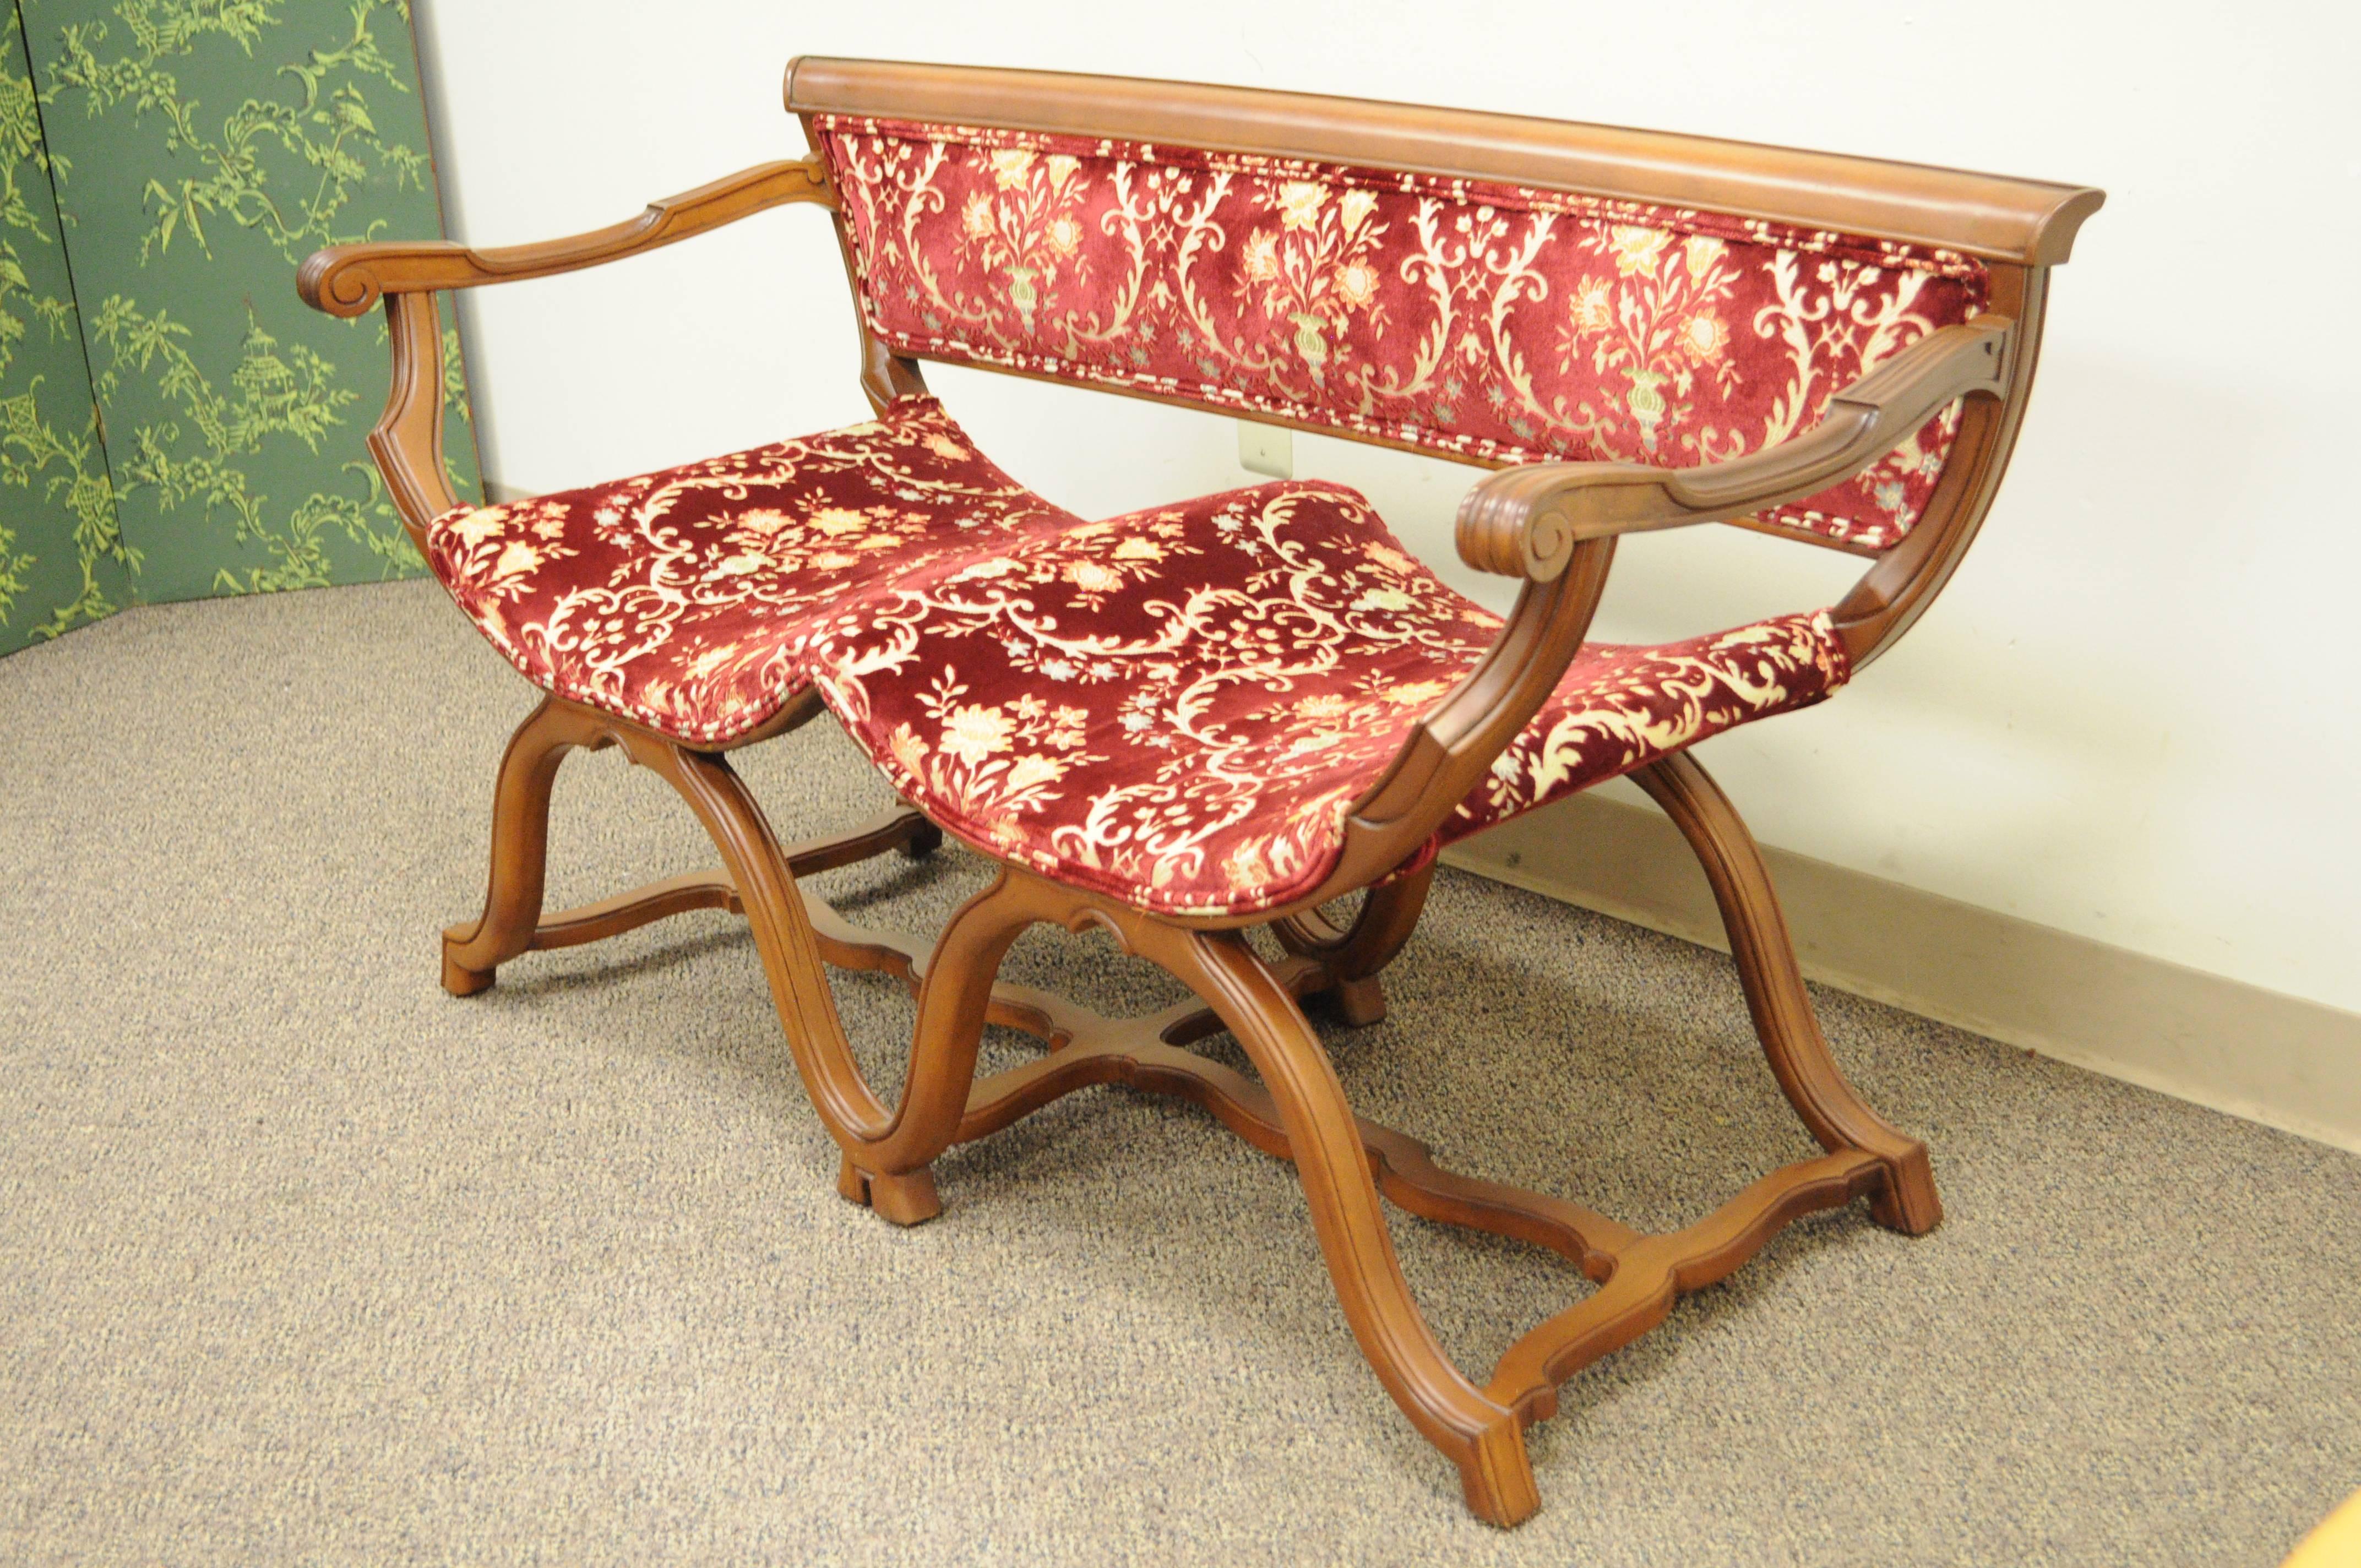 Vintage Hollywood Regency Double Curule X-Frame Settee Savonarola Bench Chair For Sale 1